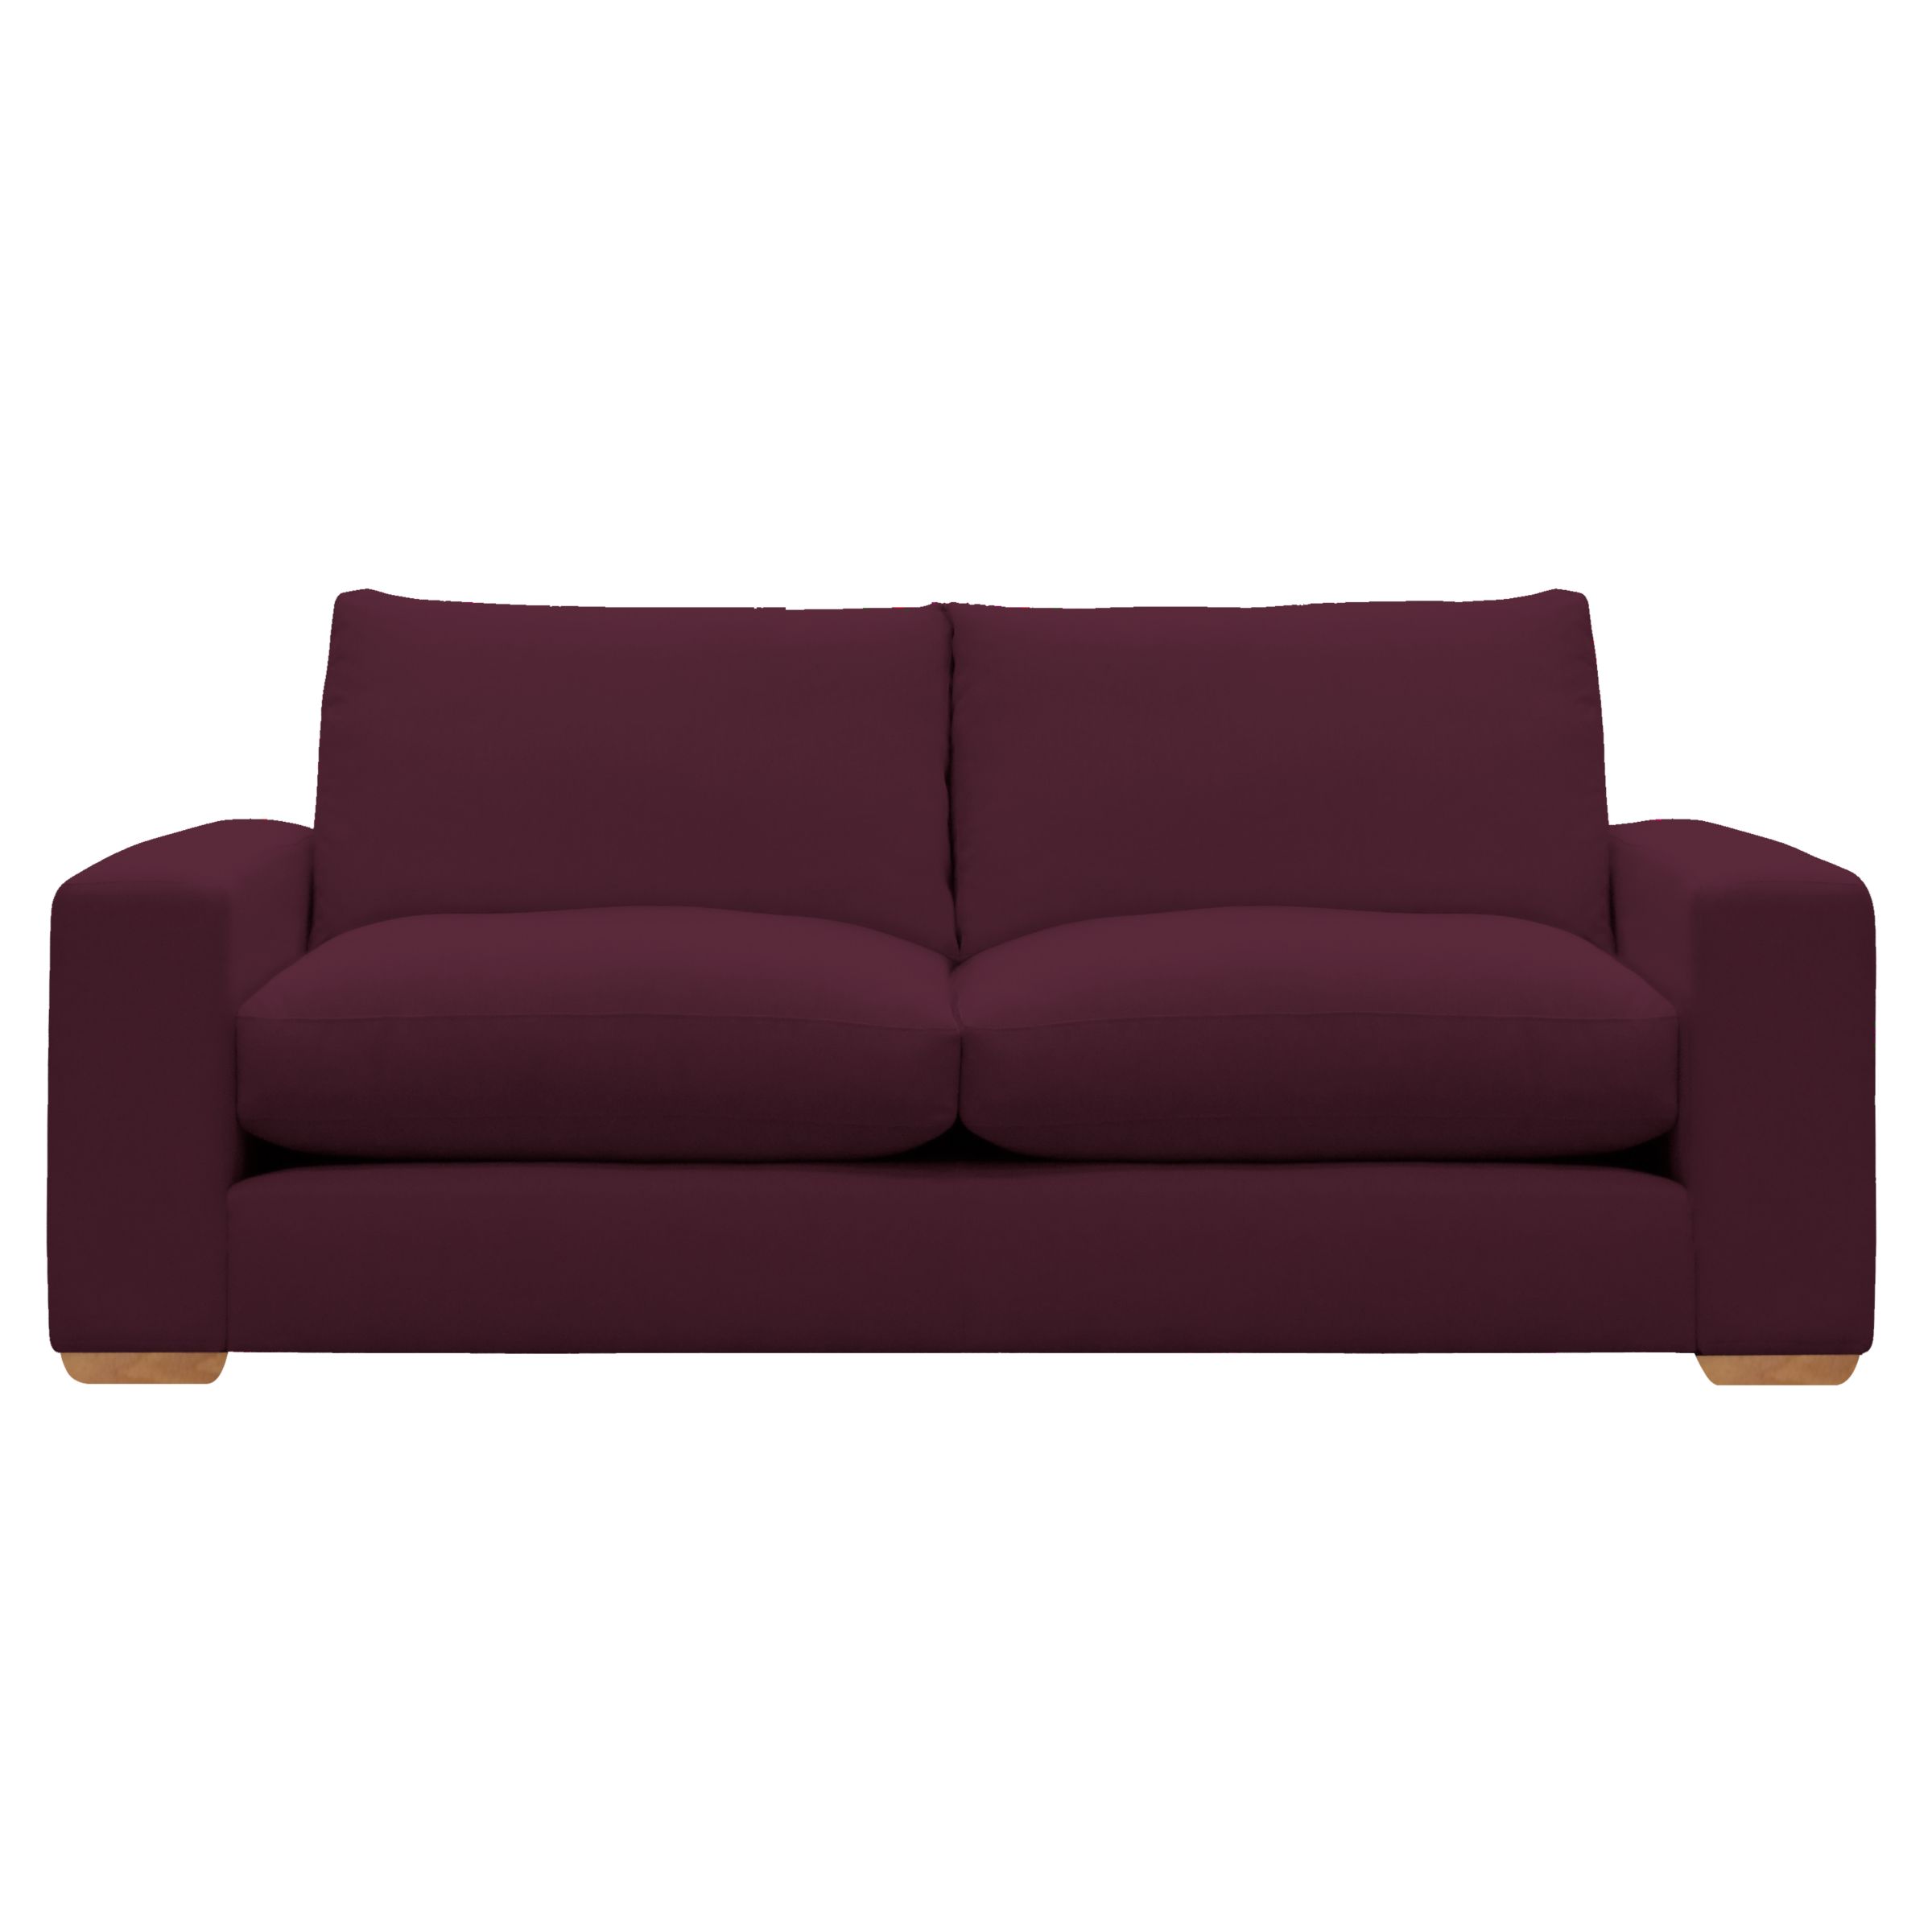 John Lewis Options Wide Arm Large Sofa, Eaton Cassis, width 200cm